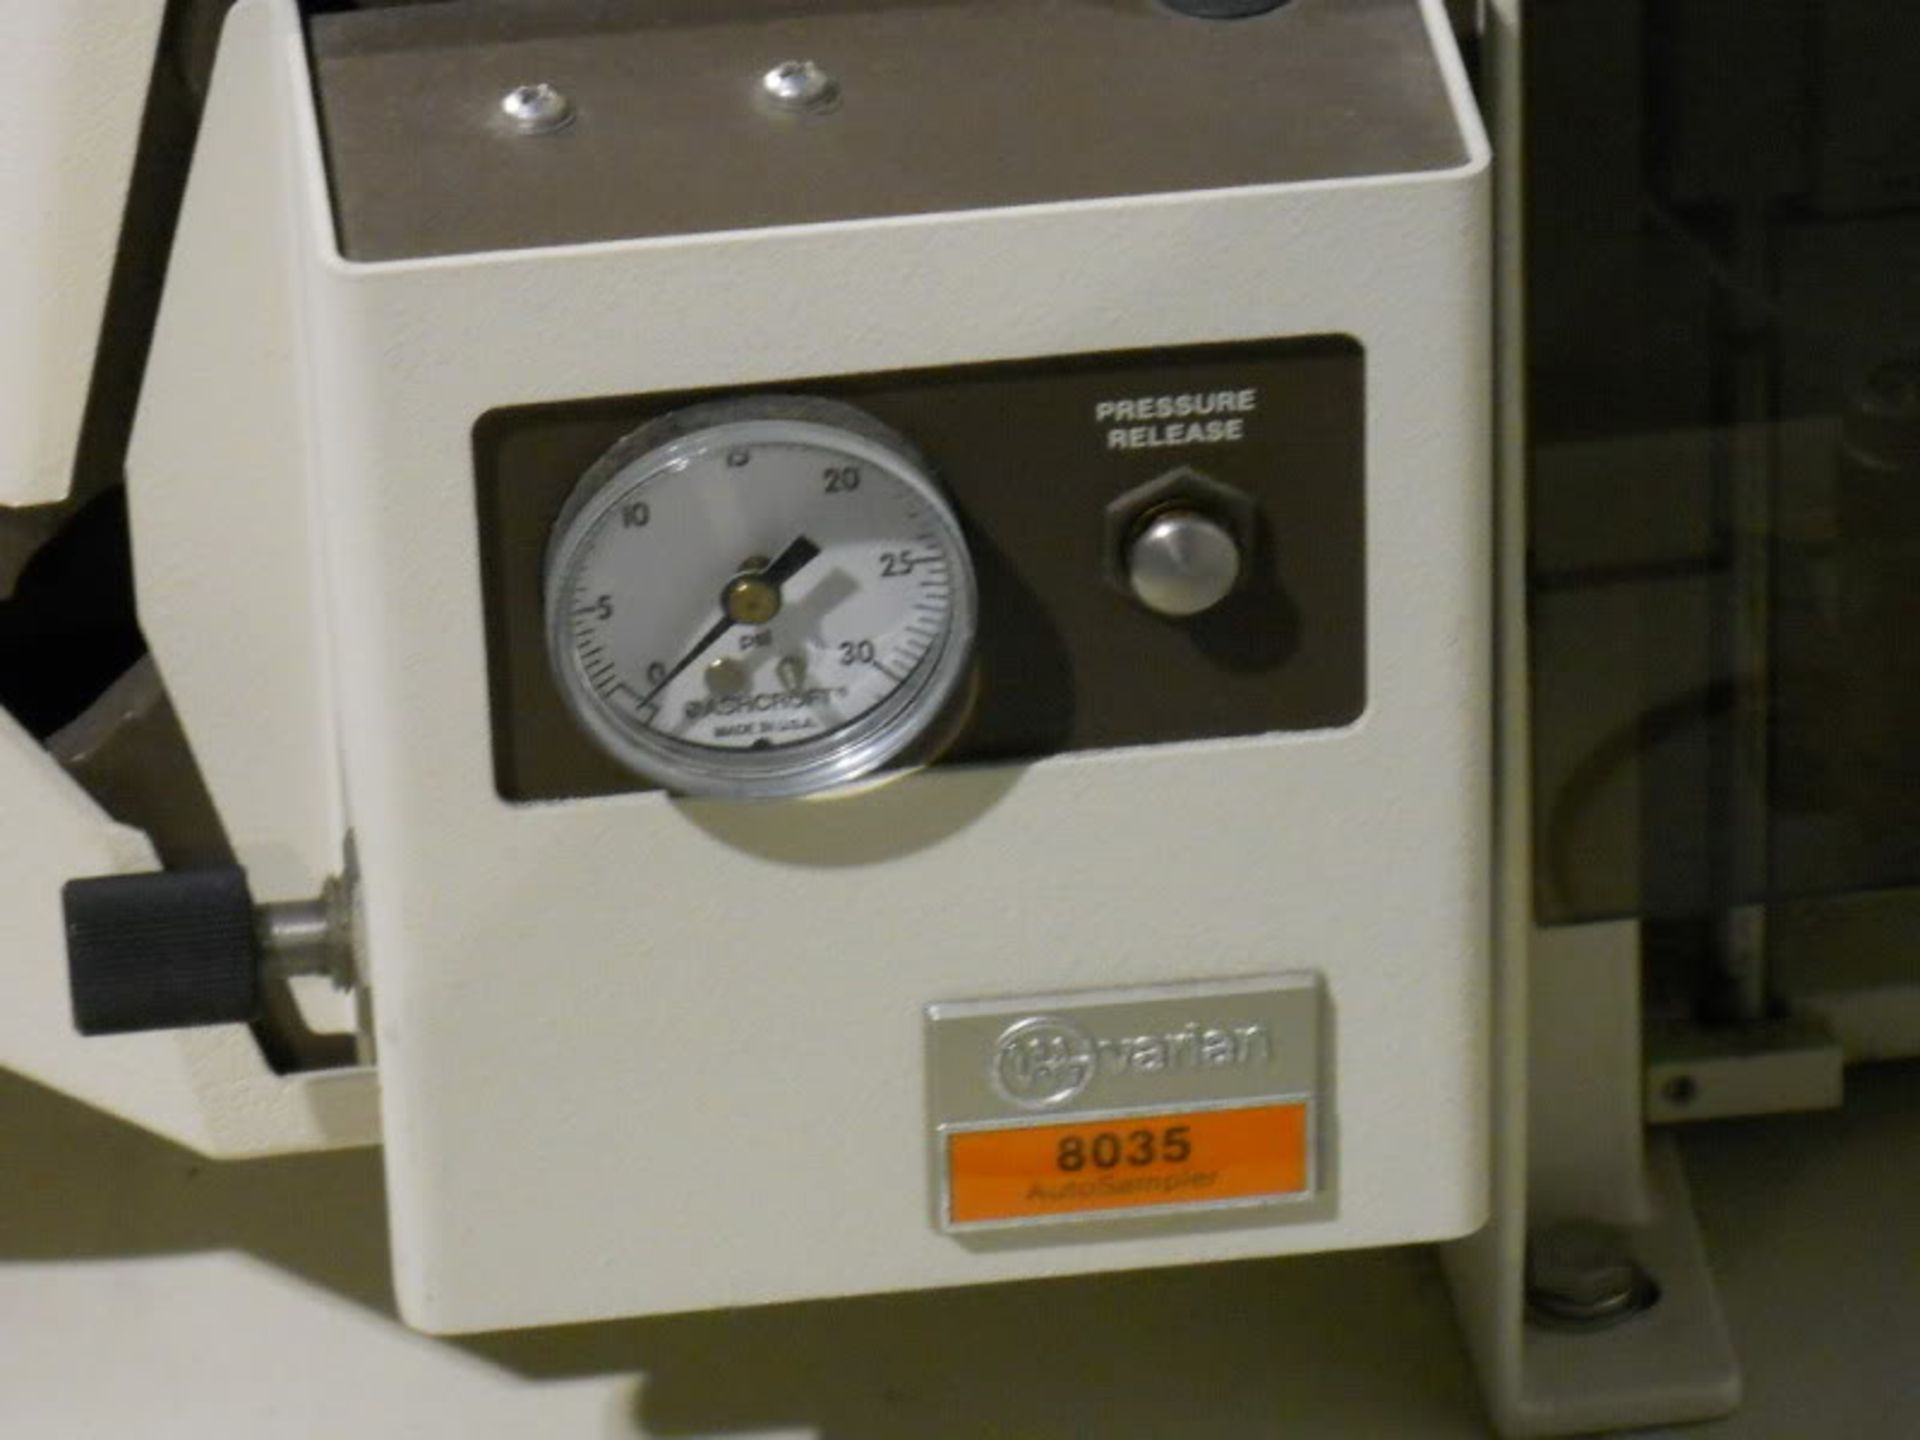 Varian GC Gas Chromatograph 3600 w/Varian Auto Sampler 8035, Qty 1, 331261748464 - Image 7 of 17